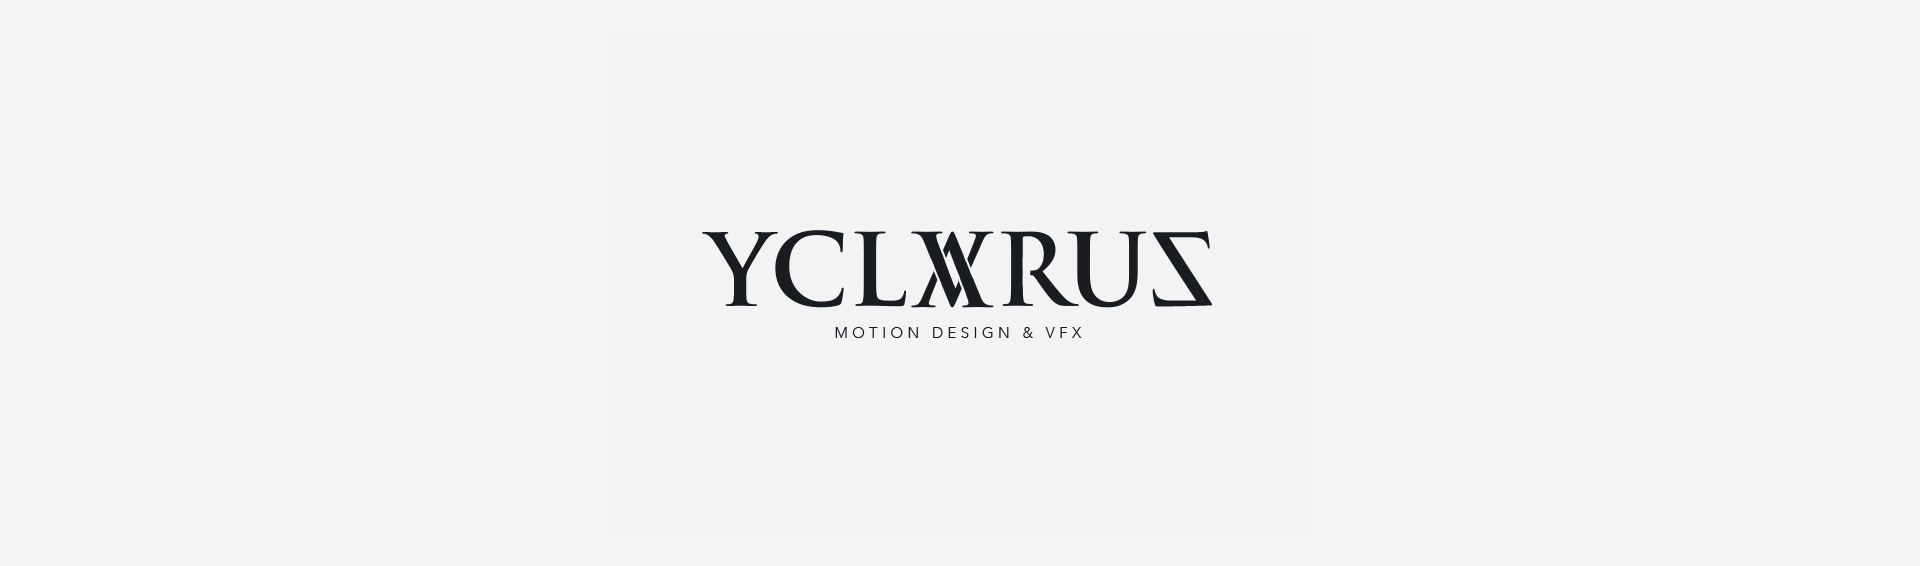 yclarus_logotype_identity_corporate_b